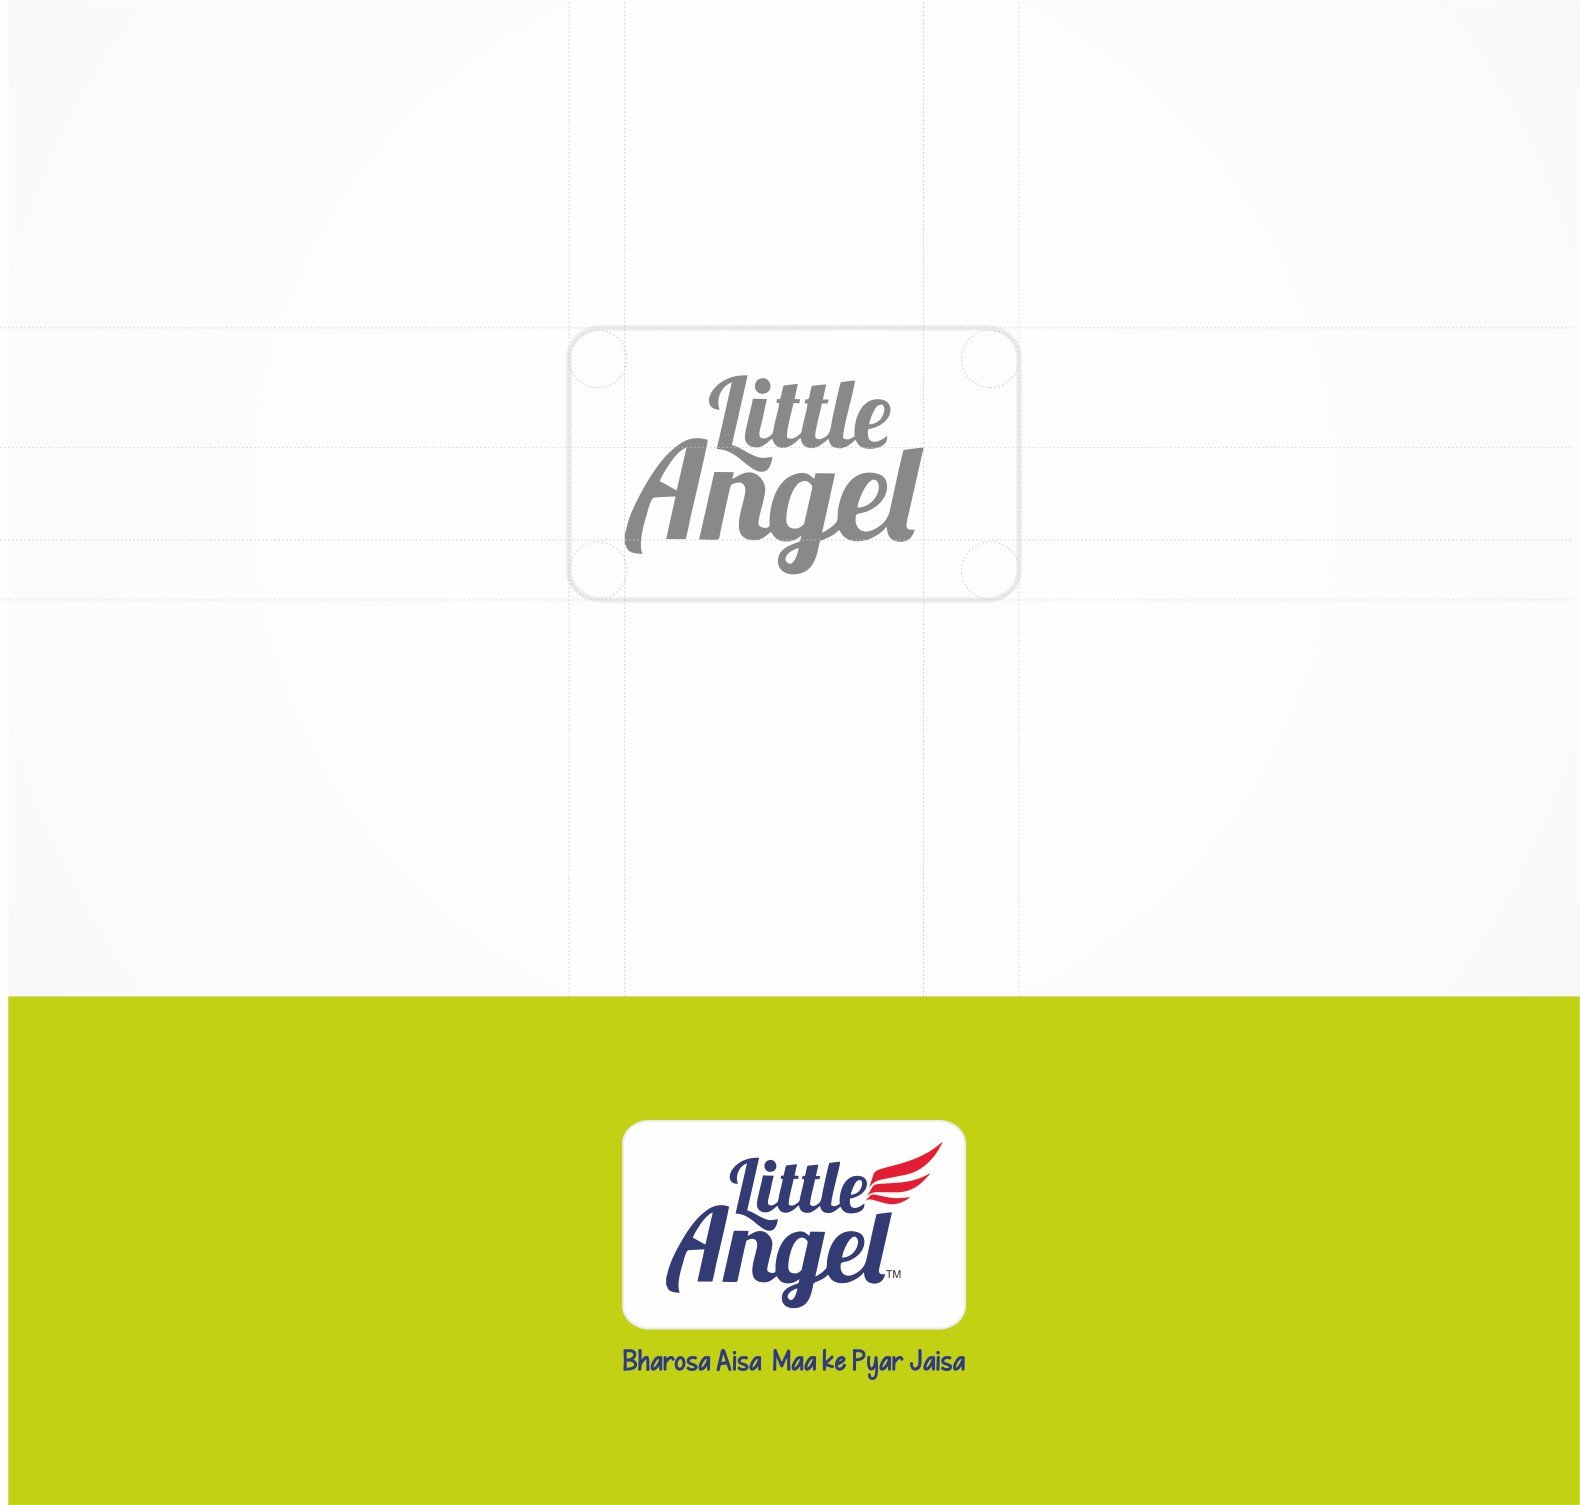 Little Angel Packaging Design - Spartan Branding